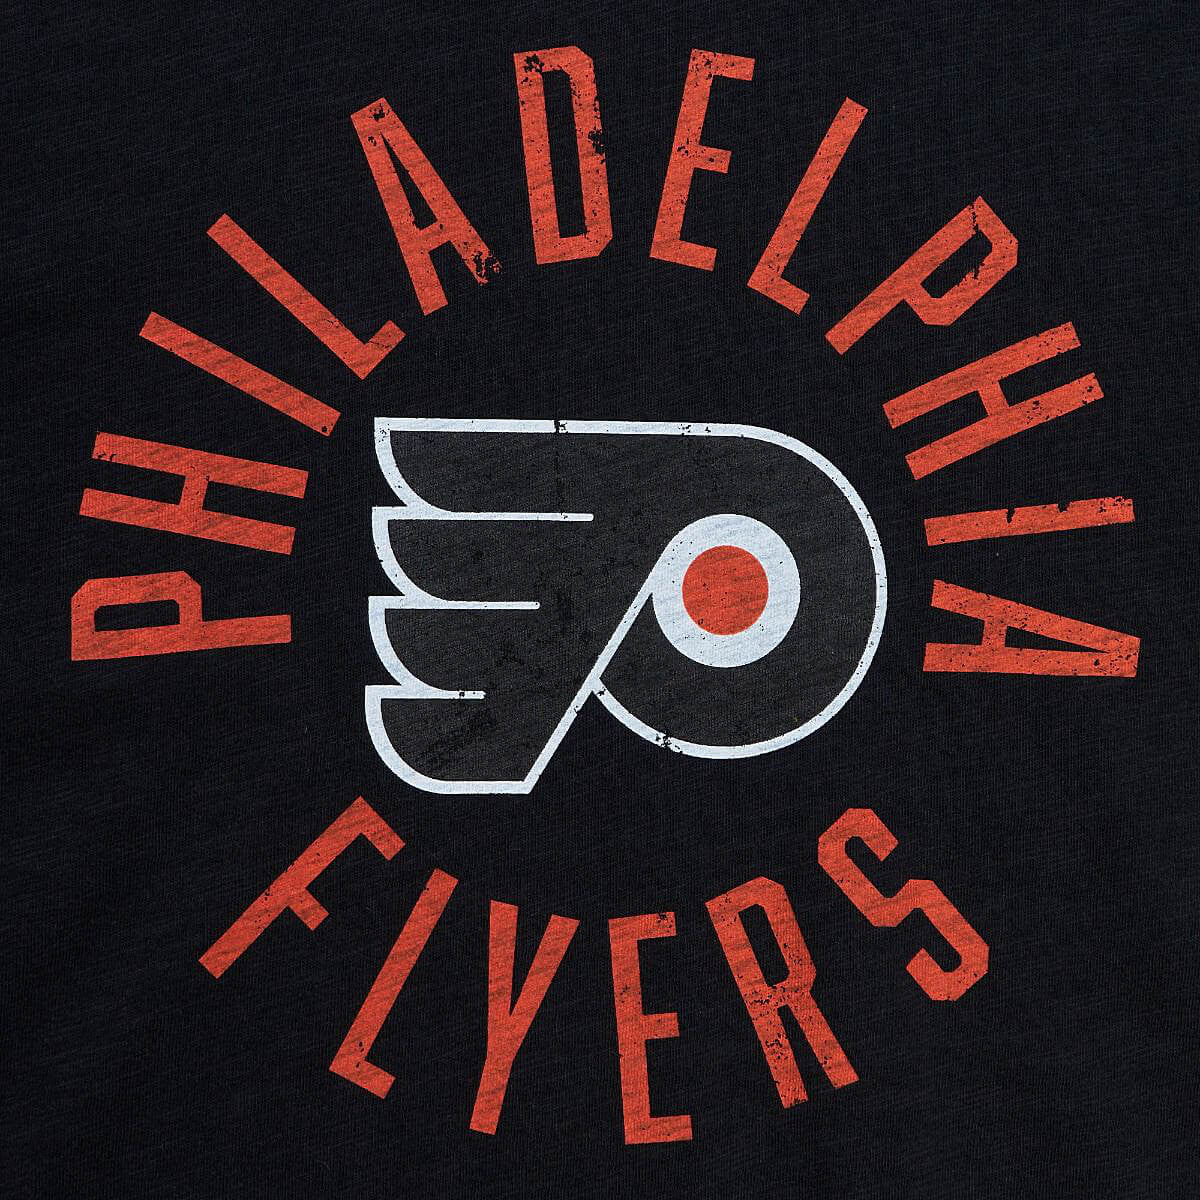 Mitchell & Ness Nhl Legendary Slub S/S Tee Flyers Philadelphia Flyers Black